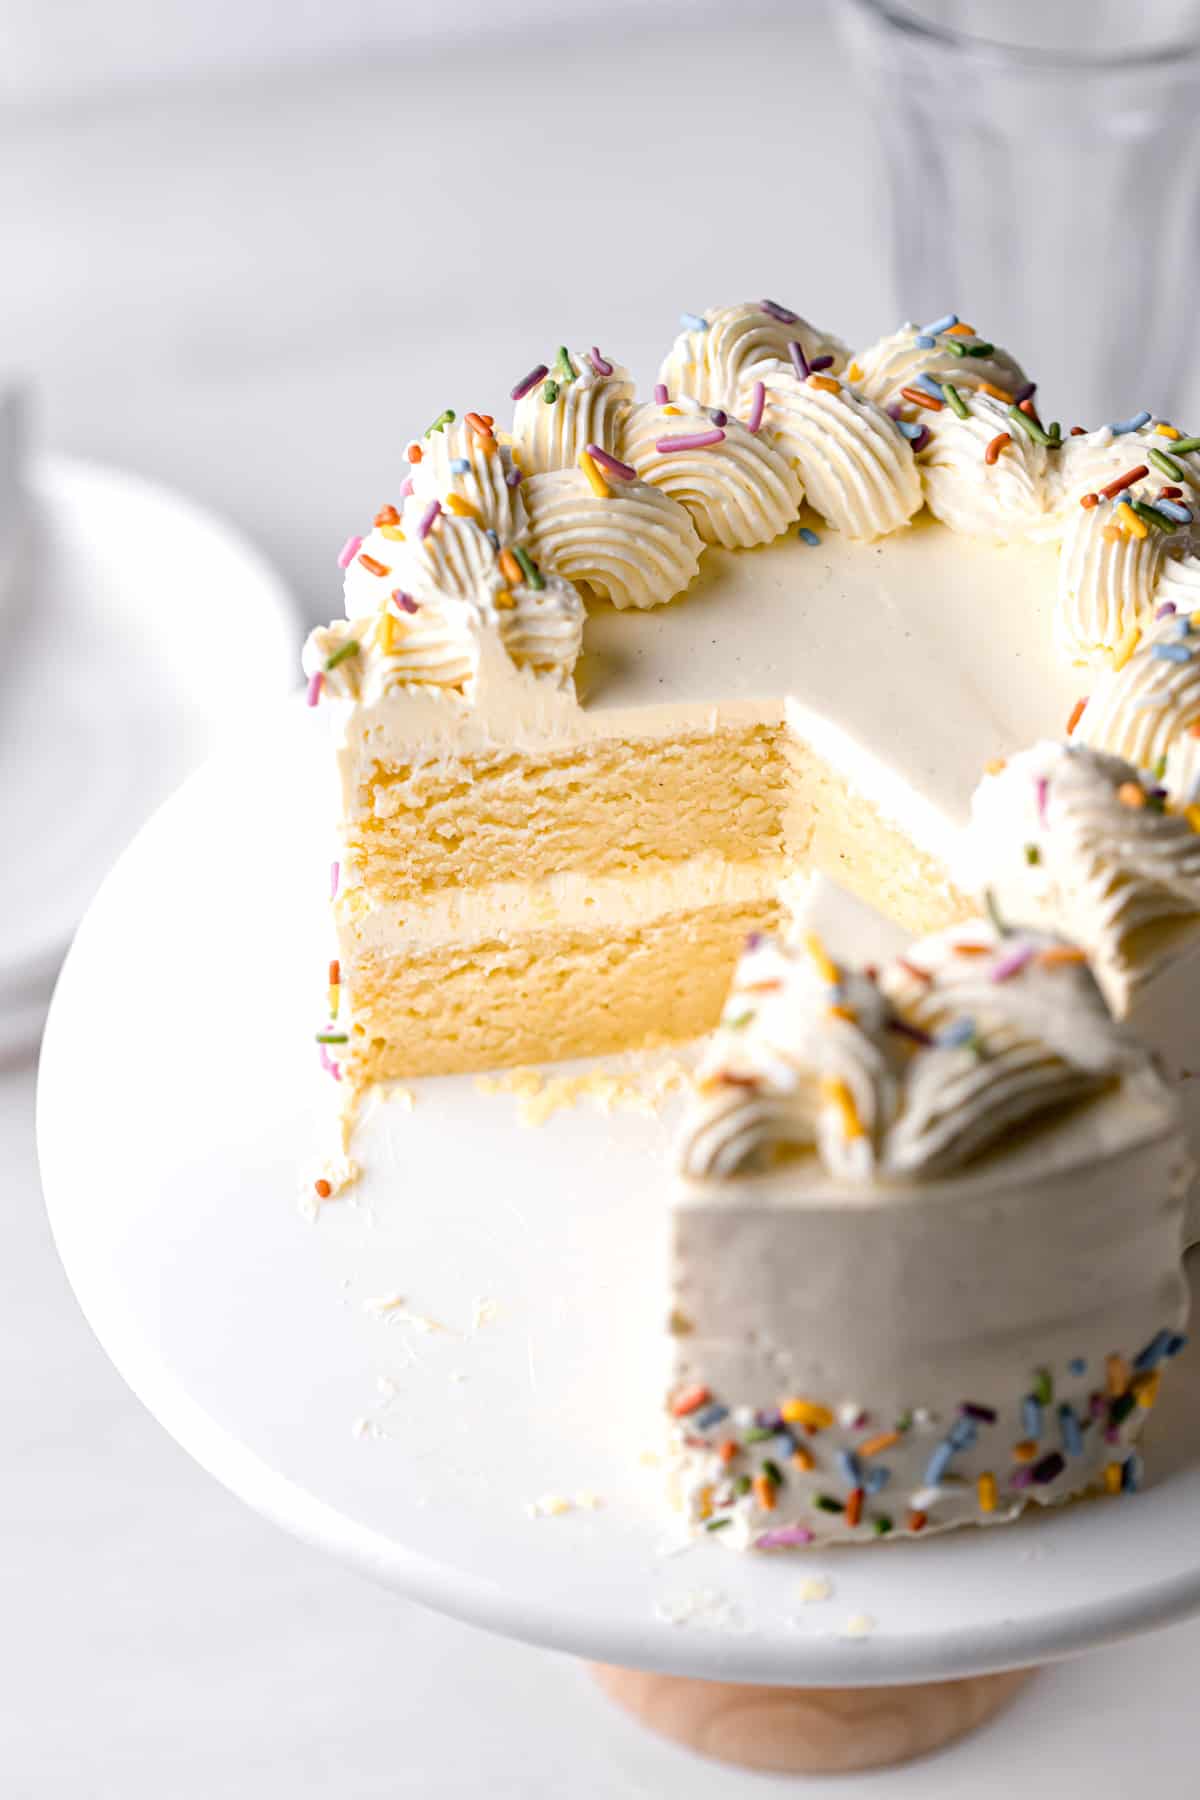 vanilla swiss meringue buttercream decorated on vanilla layer cake.